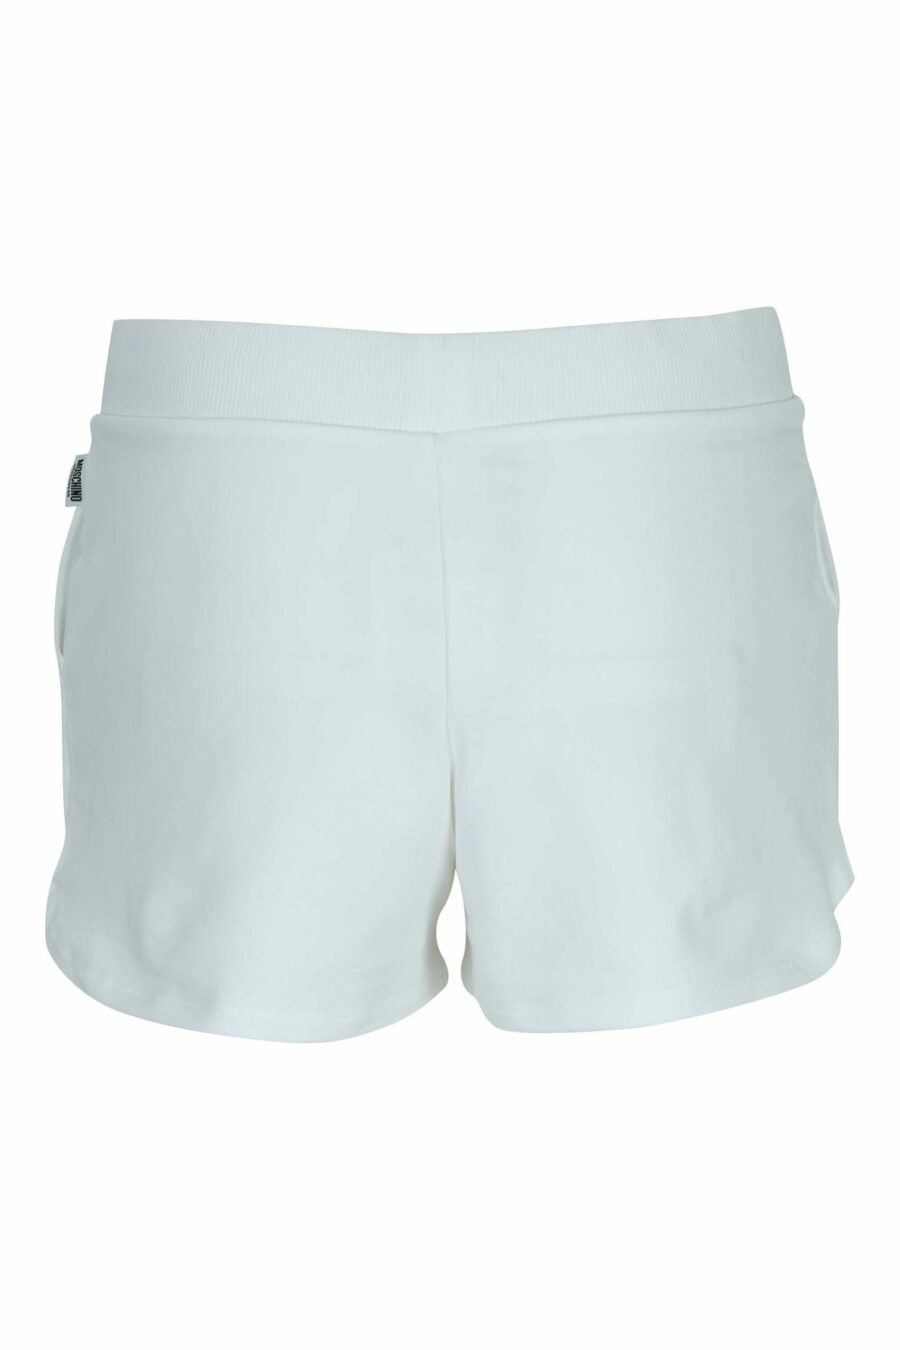 Shorts blancos con minilogo oso "underbear" parche - 667113719399 1 scaled